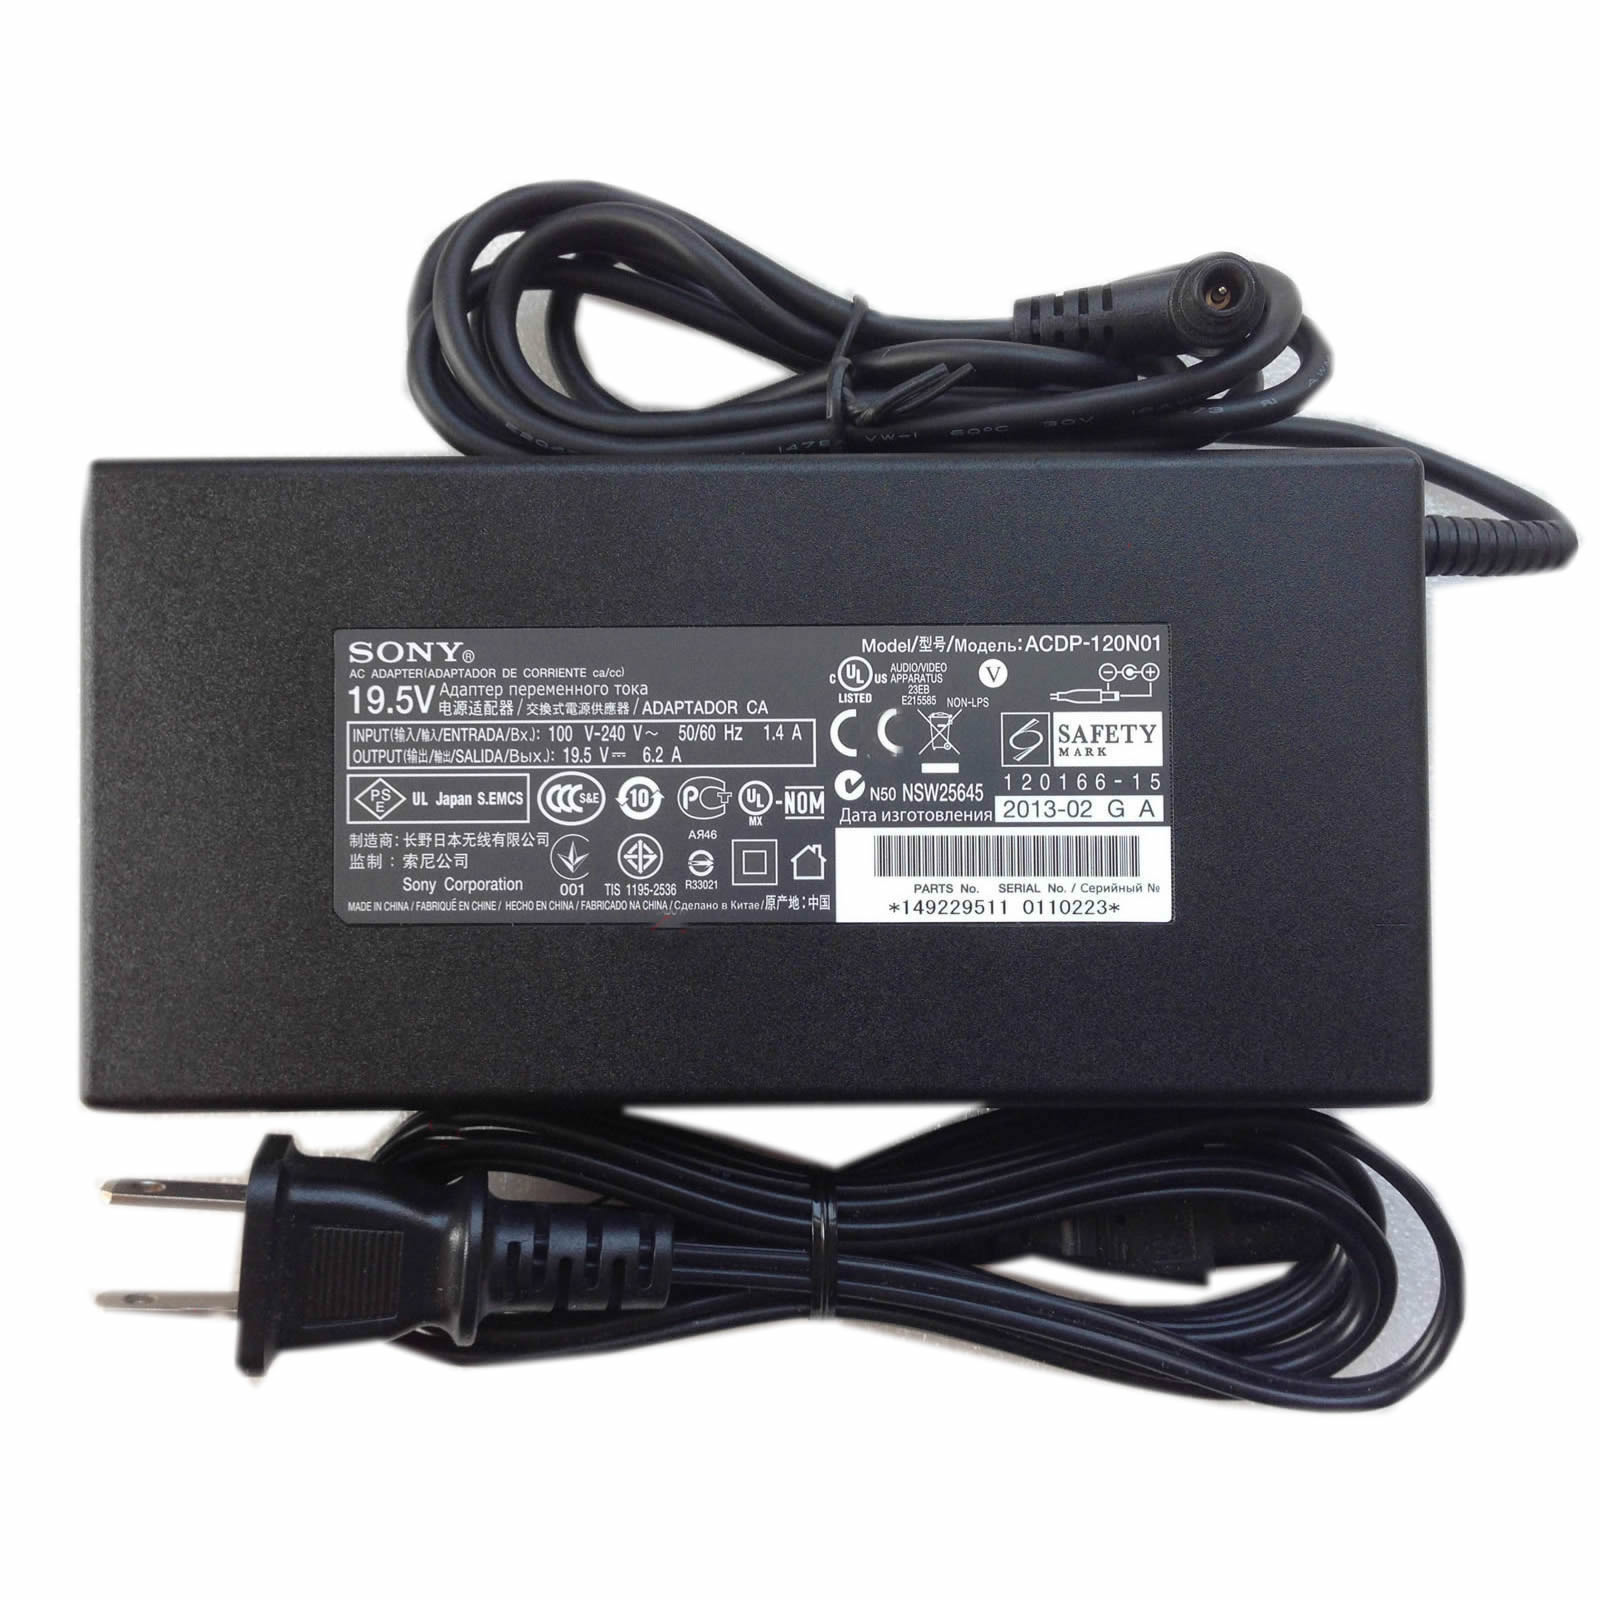 Sony ACDP-120E01 ACDP-120N01 19.5V 6.2A 121W for Sony KDL Series KDL-42W670A KDL-42W650A 55W950A LCD Monitor Power Supply